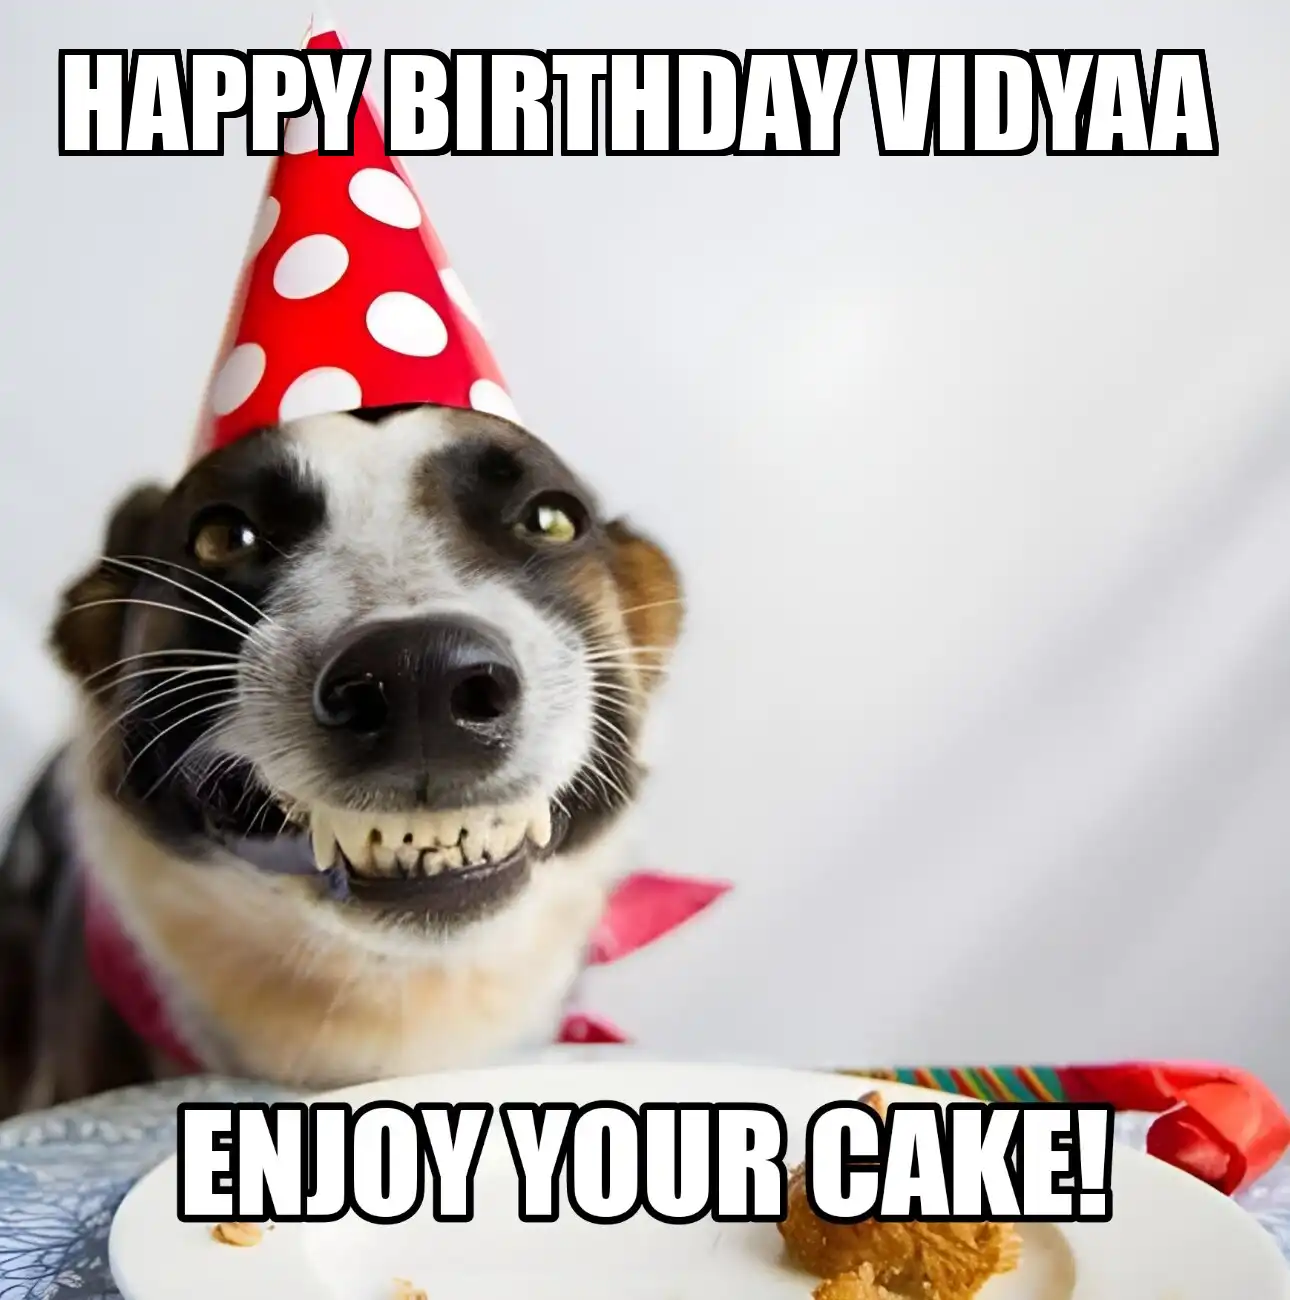 Happy Birthday Vidyaa Enjoy Your Cake Dog Meme